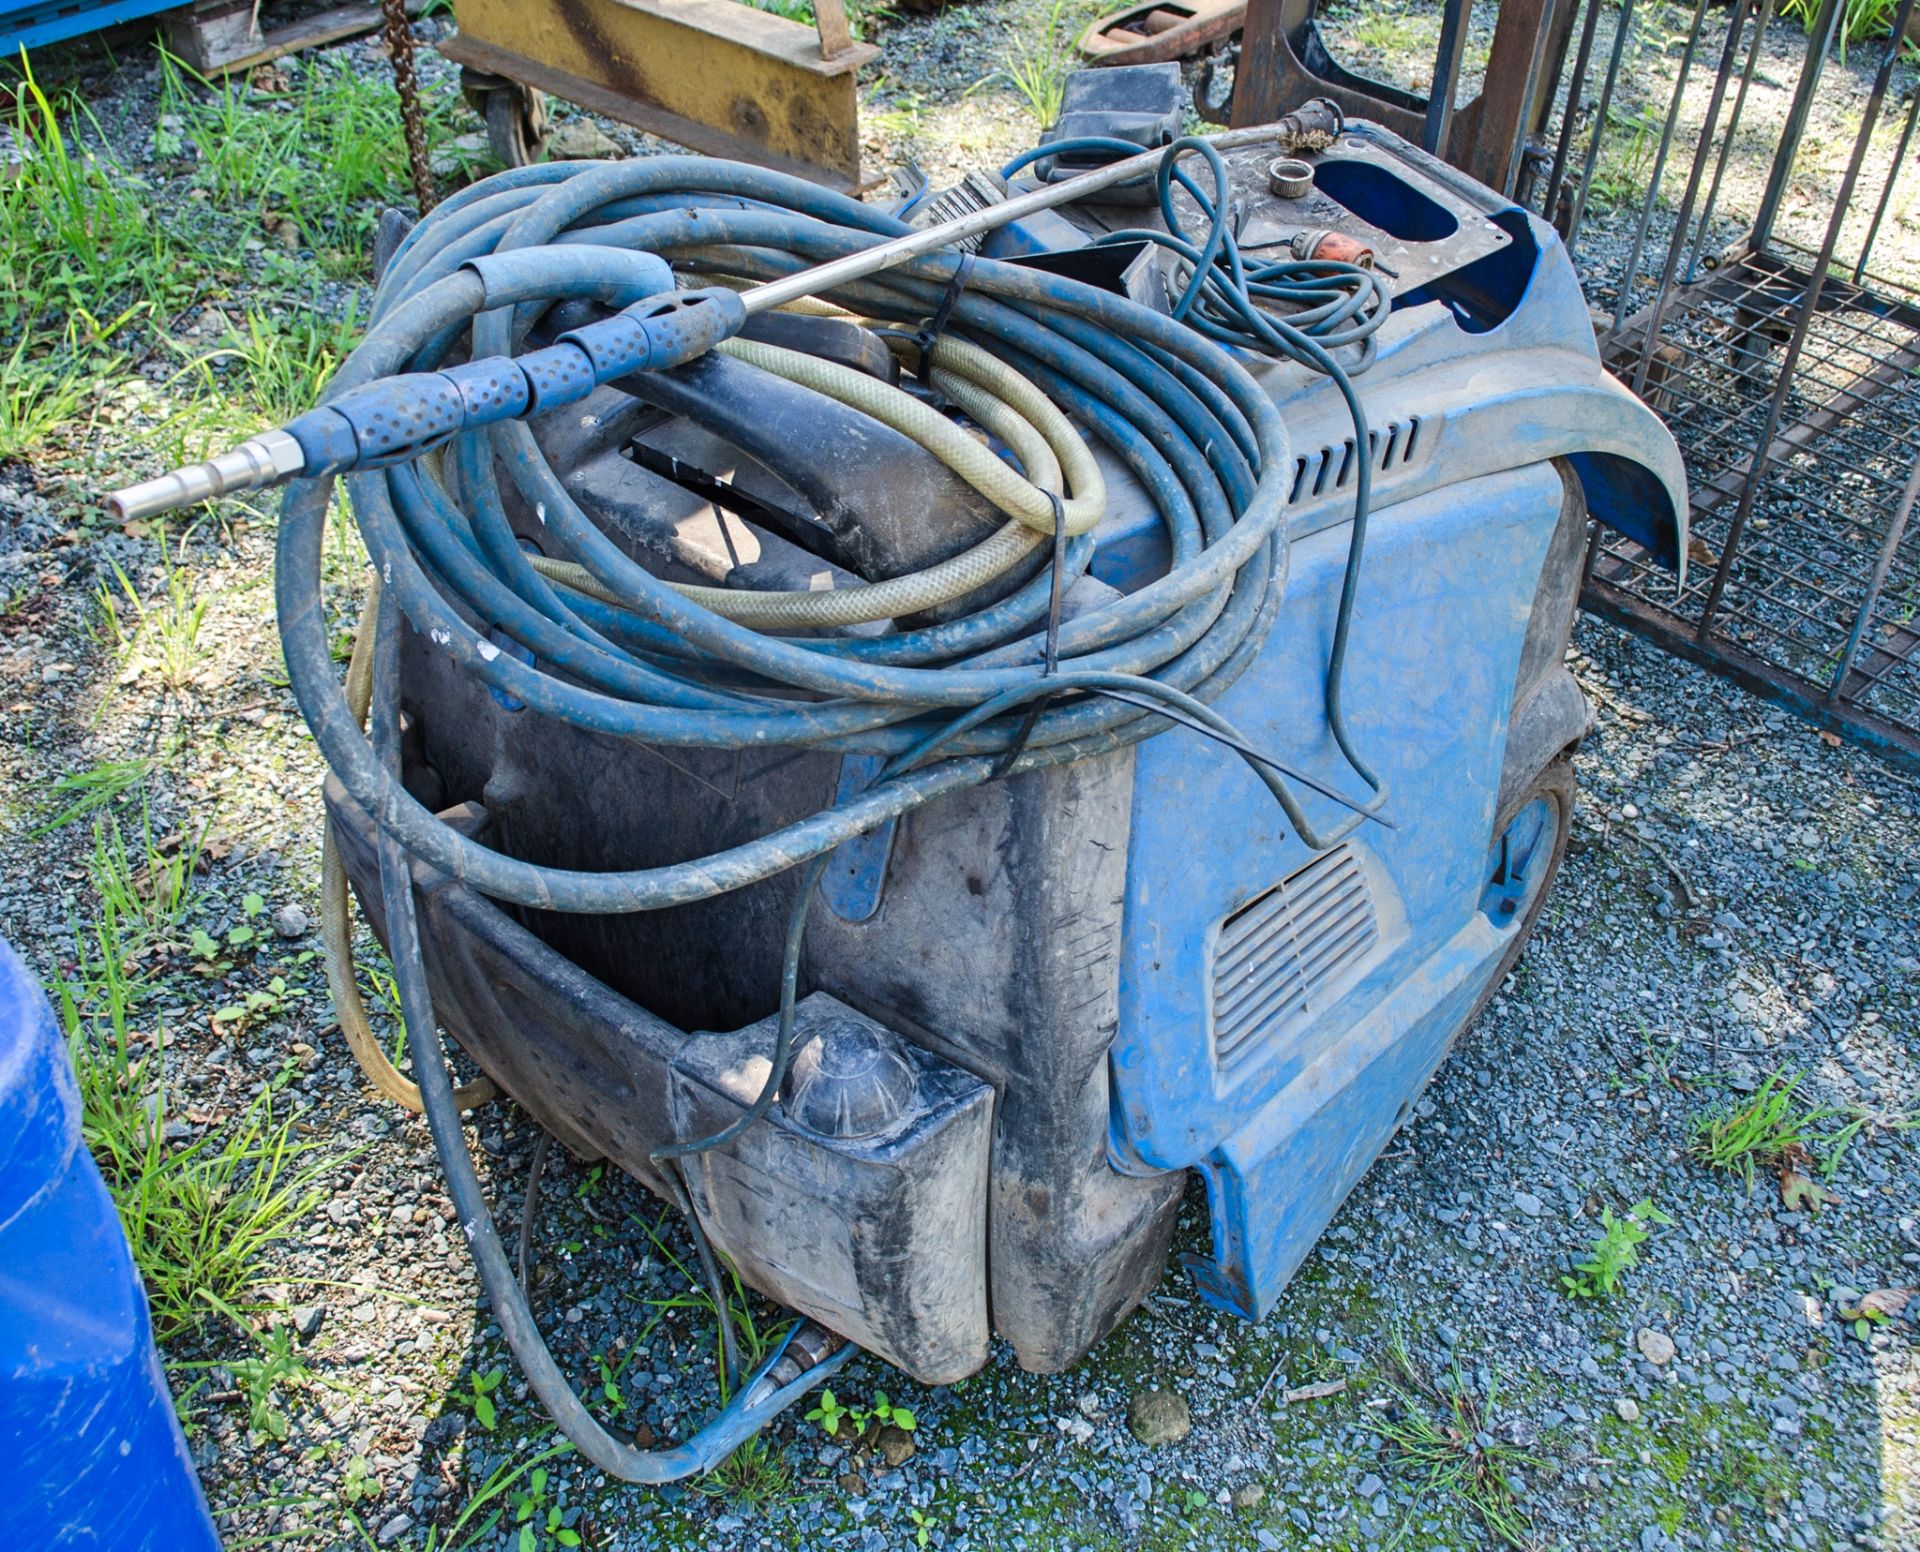 240 volt steam cleaner ** In disrepair ** - Image 2 of 2